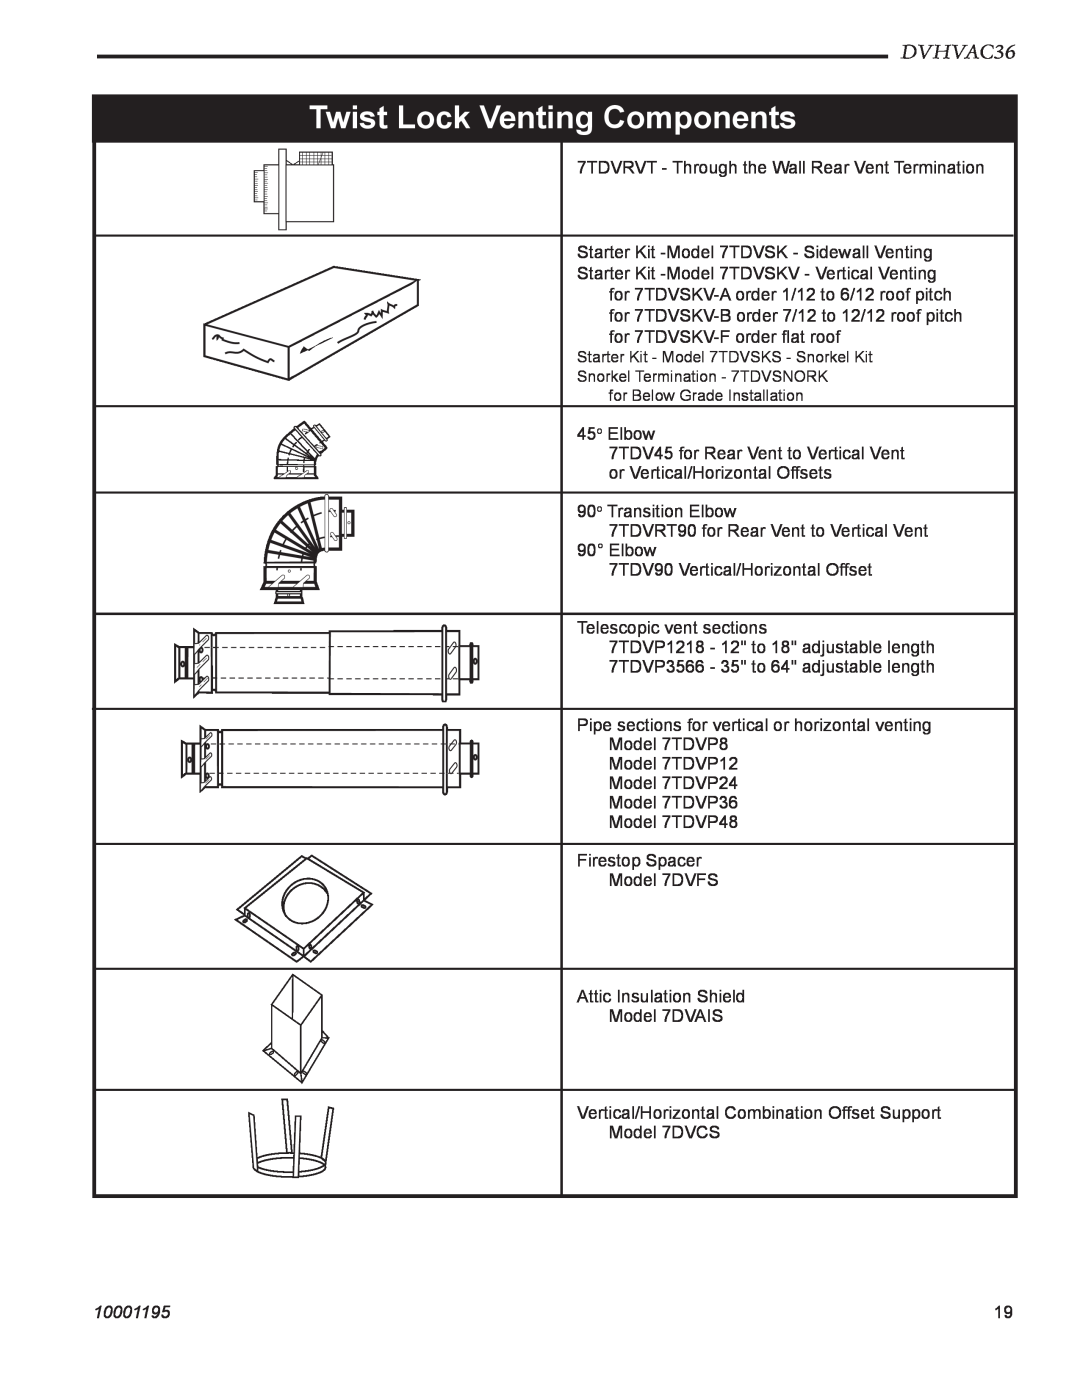 Vermont Casting DVHVAC36 manual Twist Lock Venting Components, 10001195 